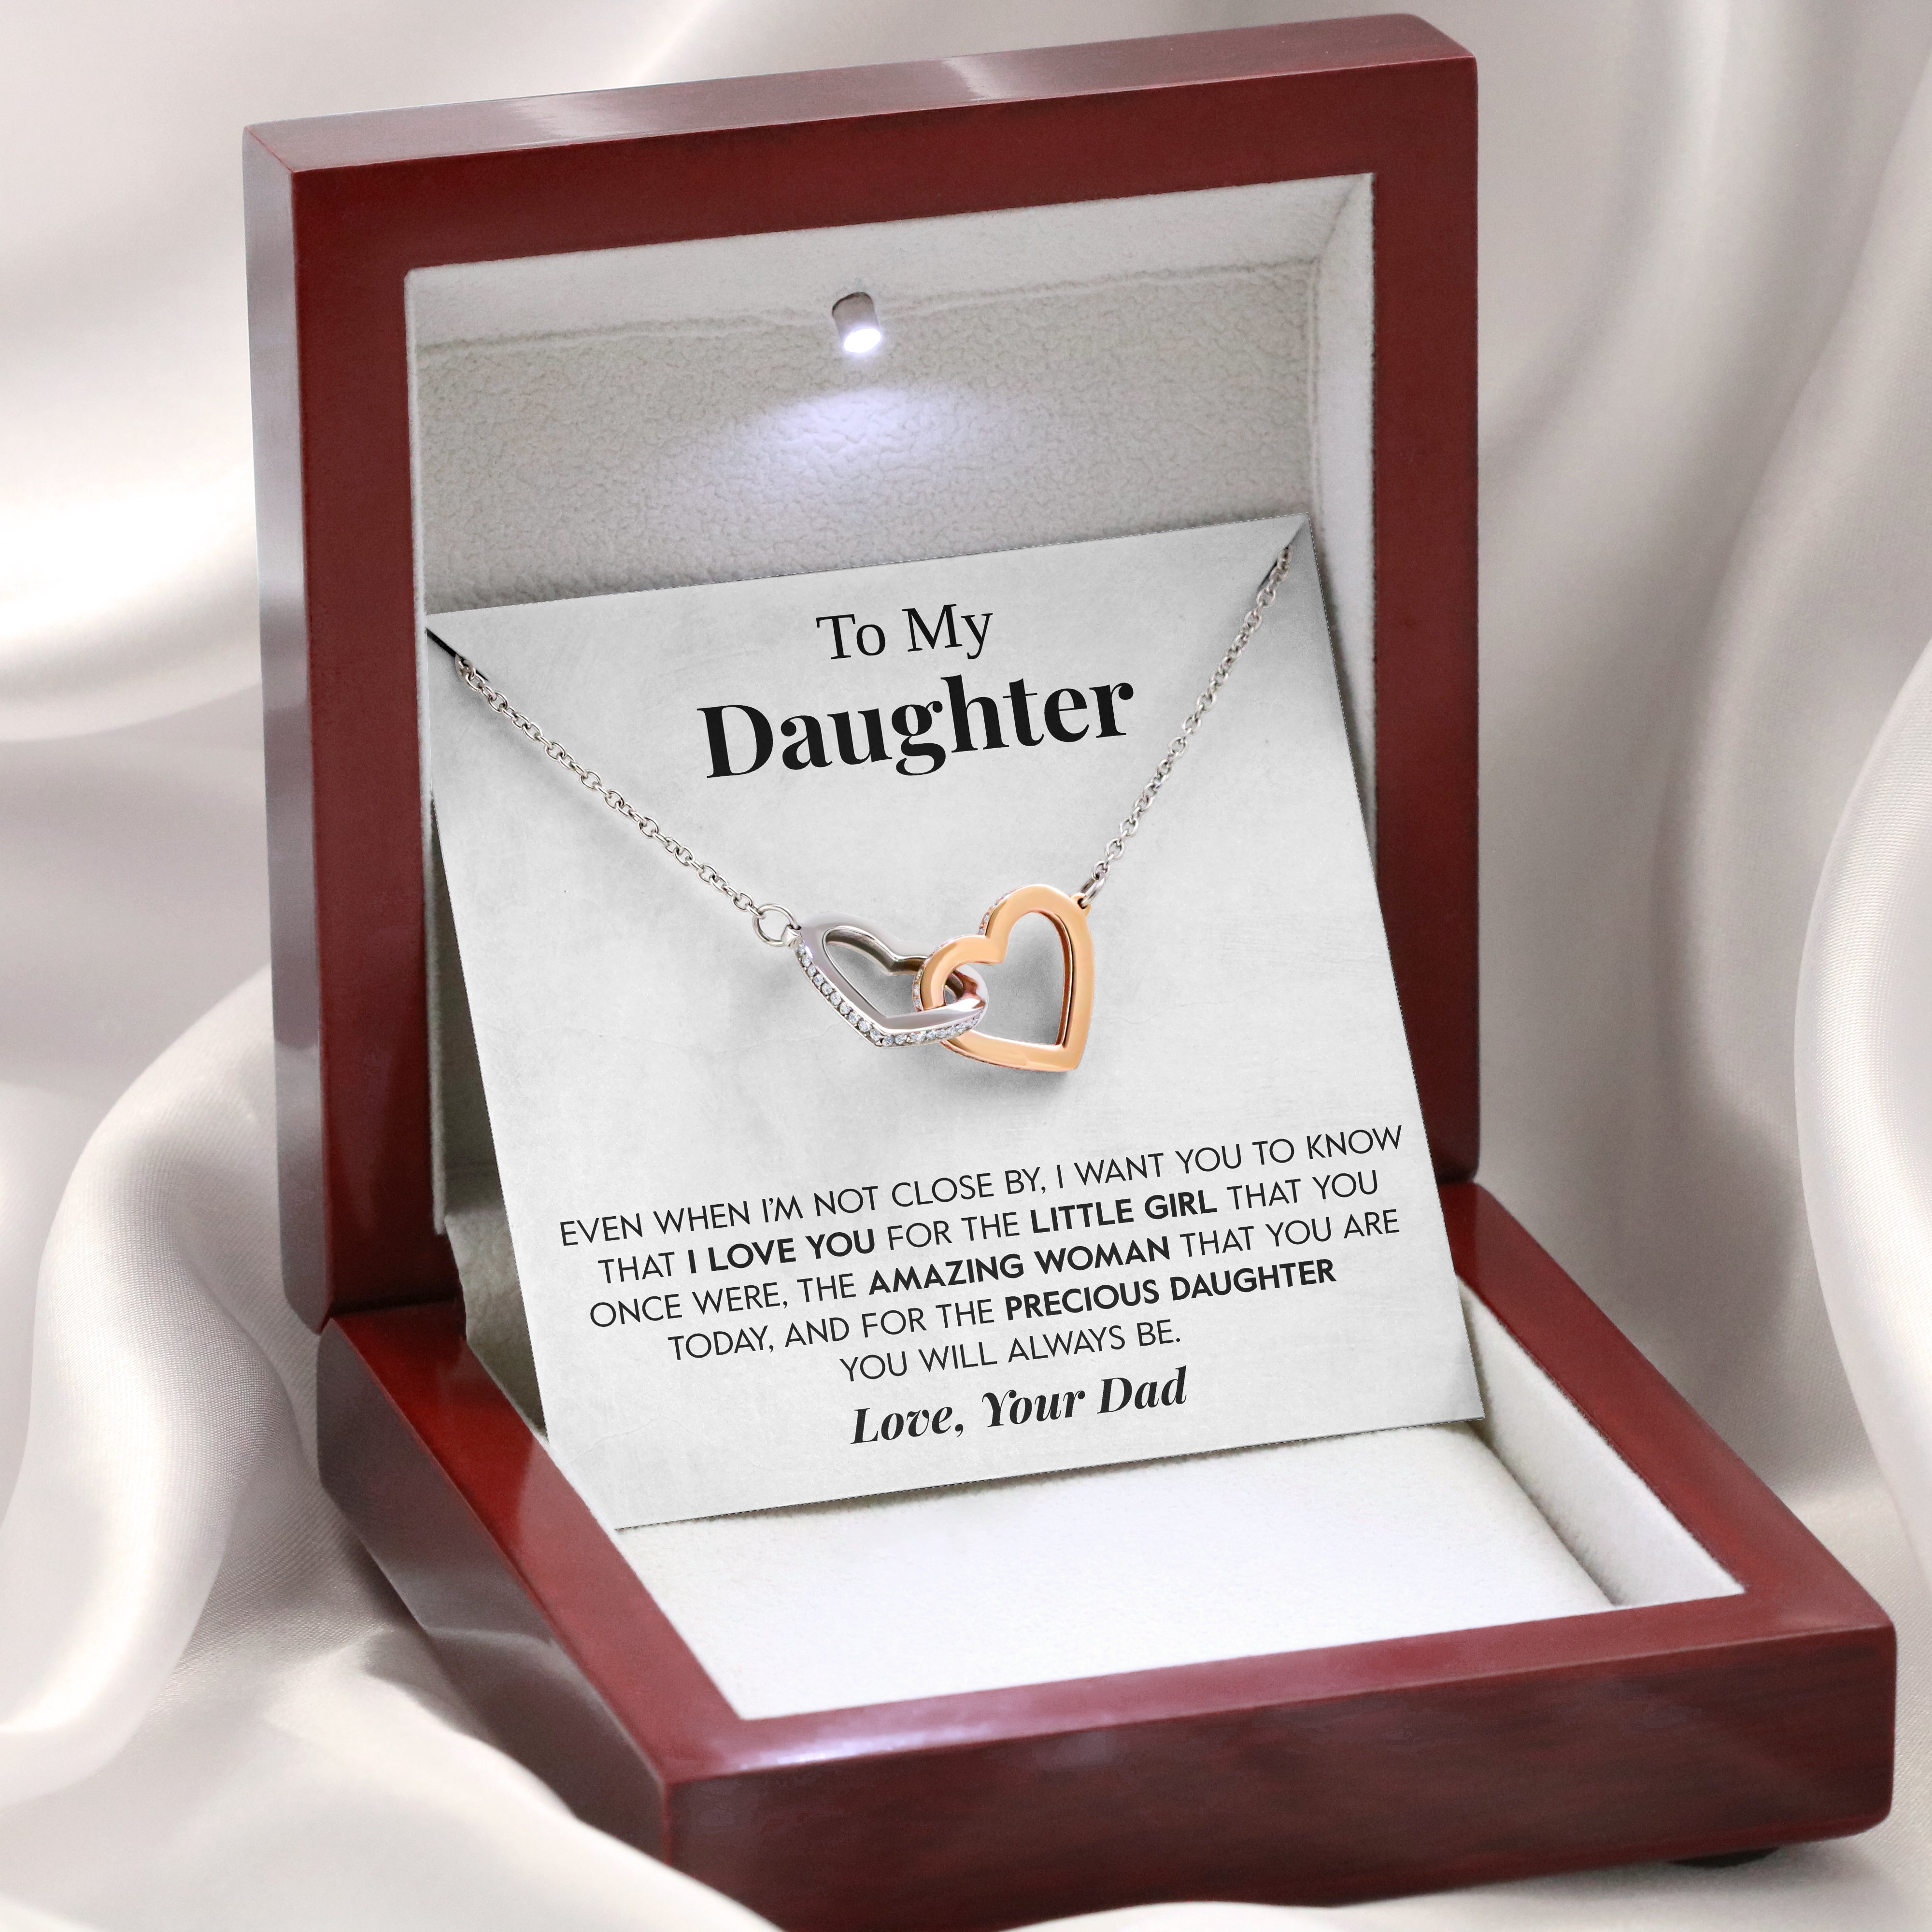 To My Daughter | "Precious Daughter" | Interlocking Hearts Necklace